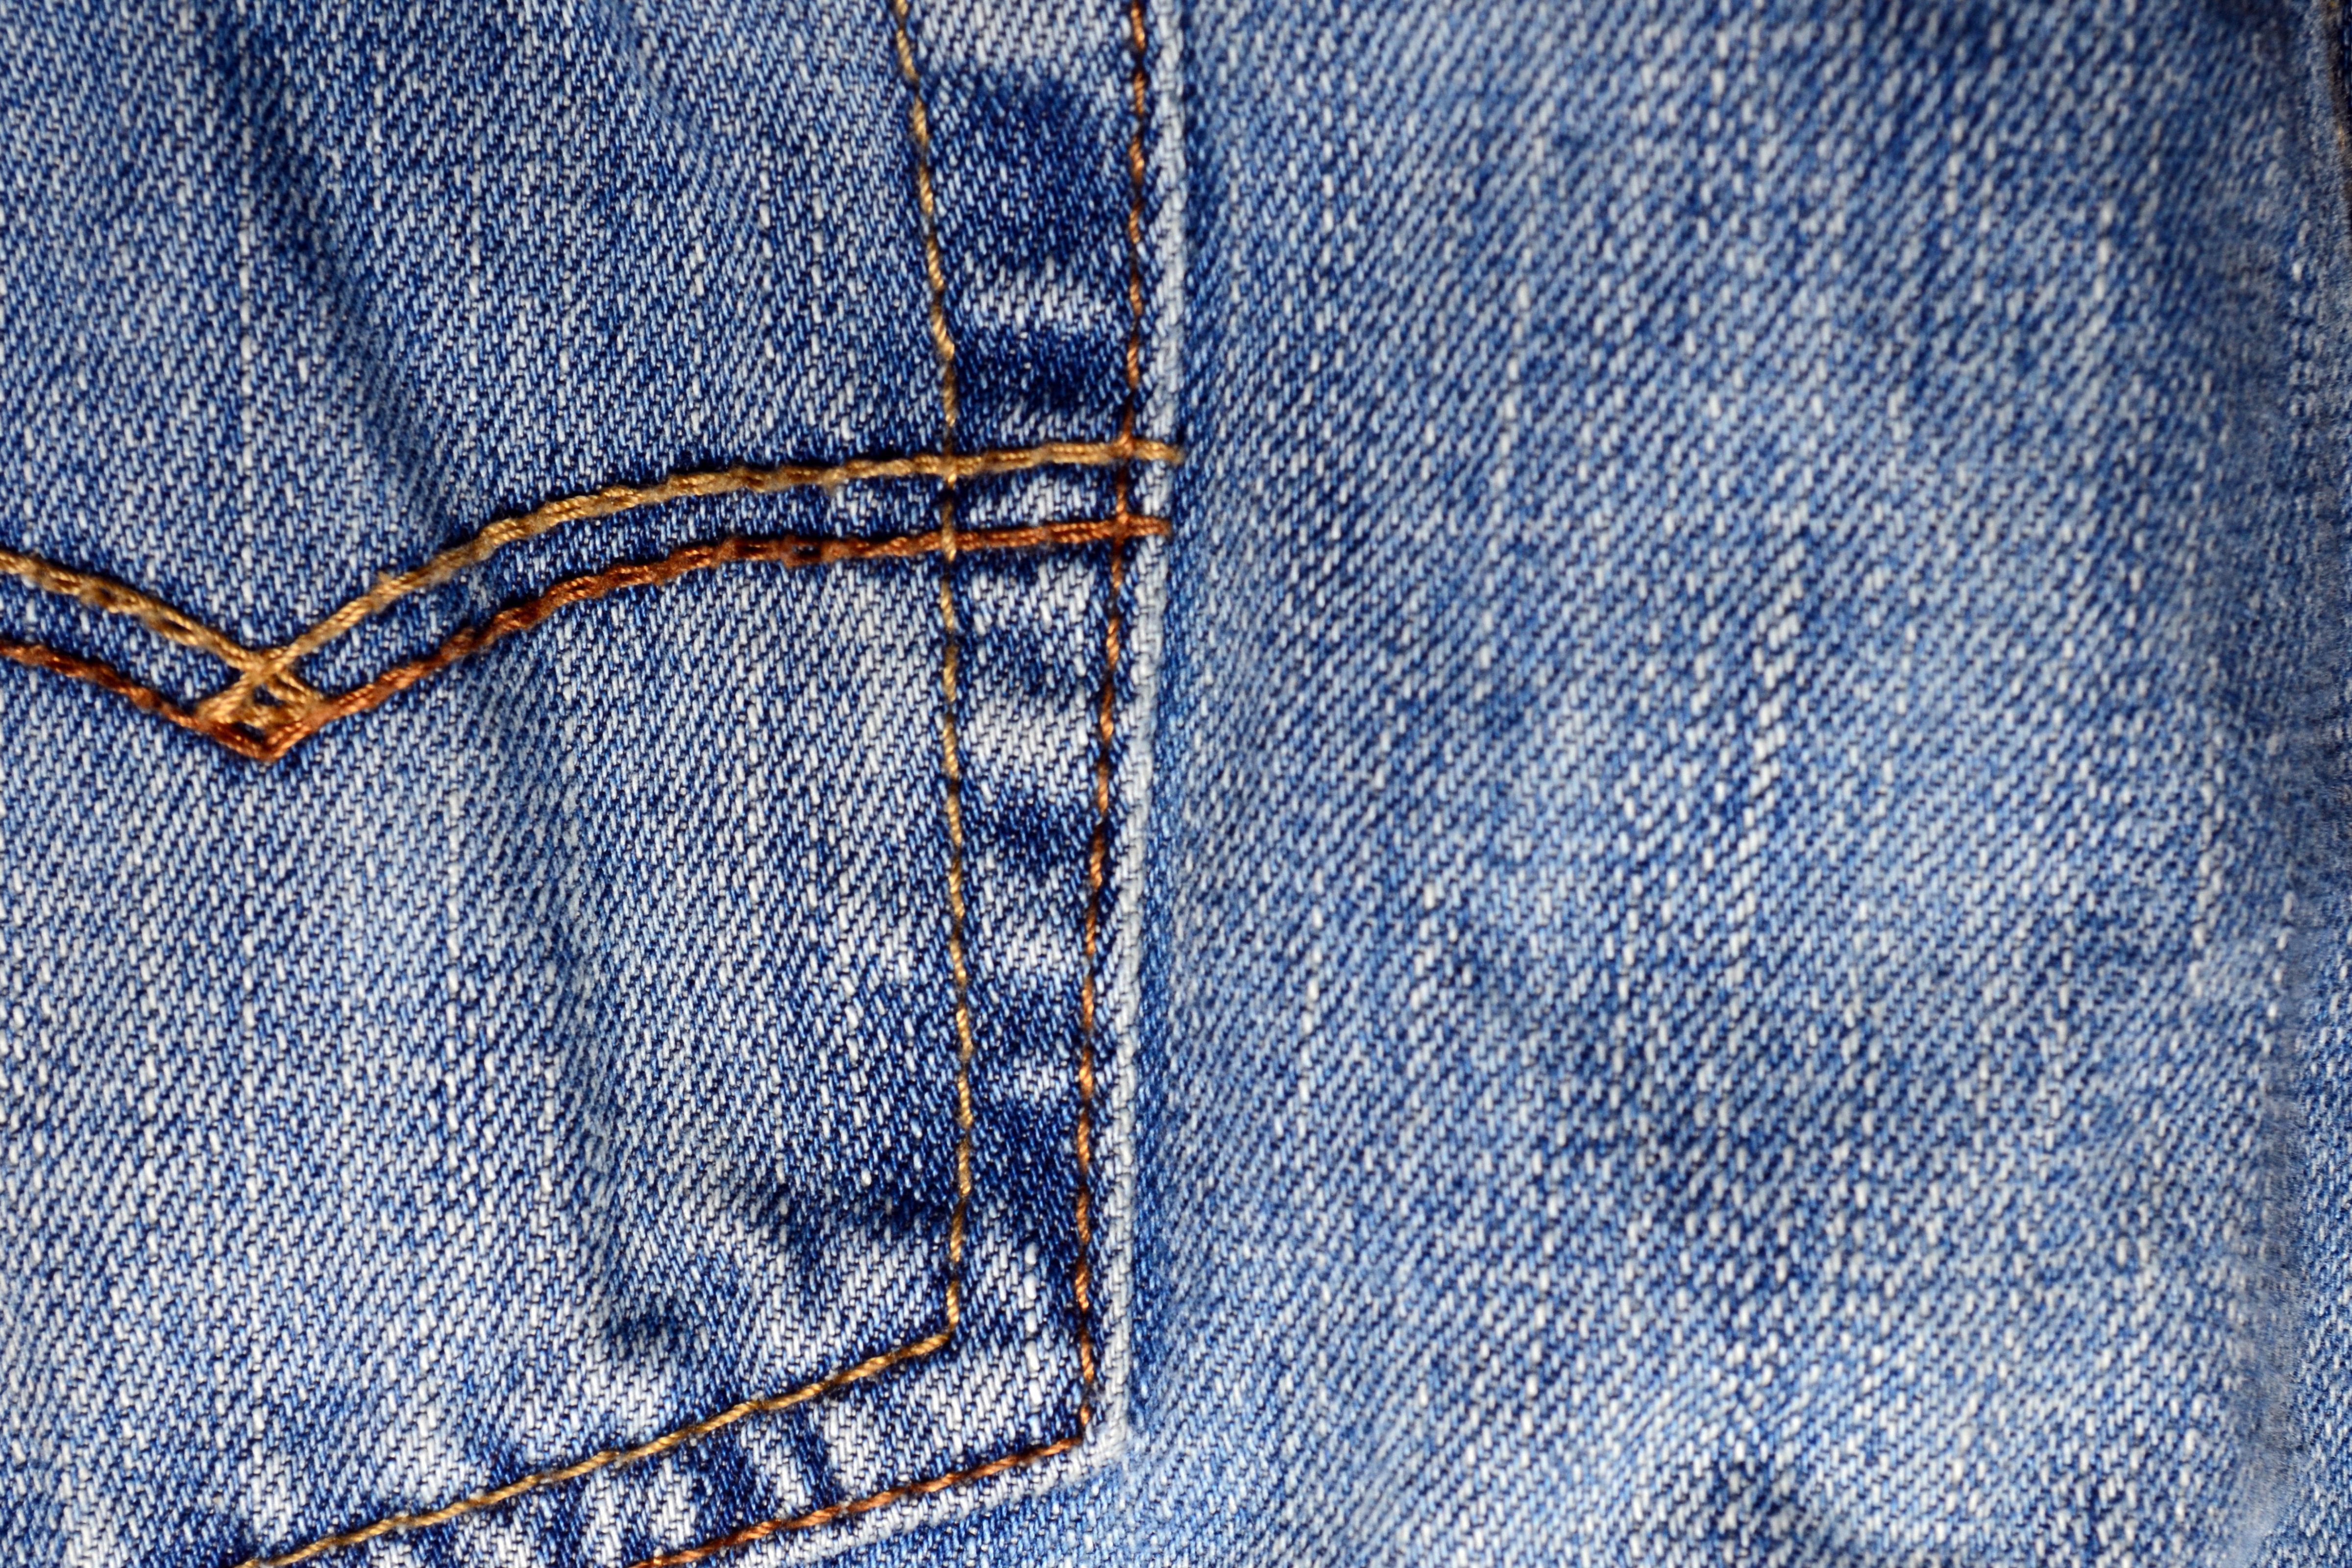 22 Blue Jean Textures